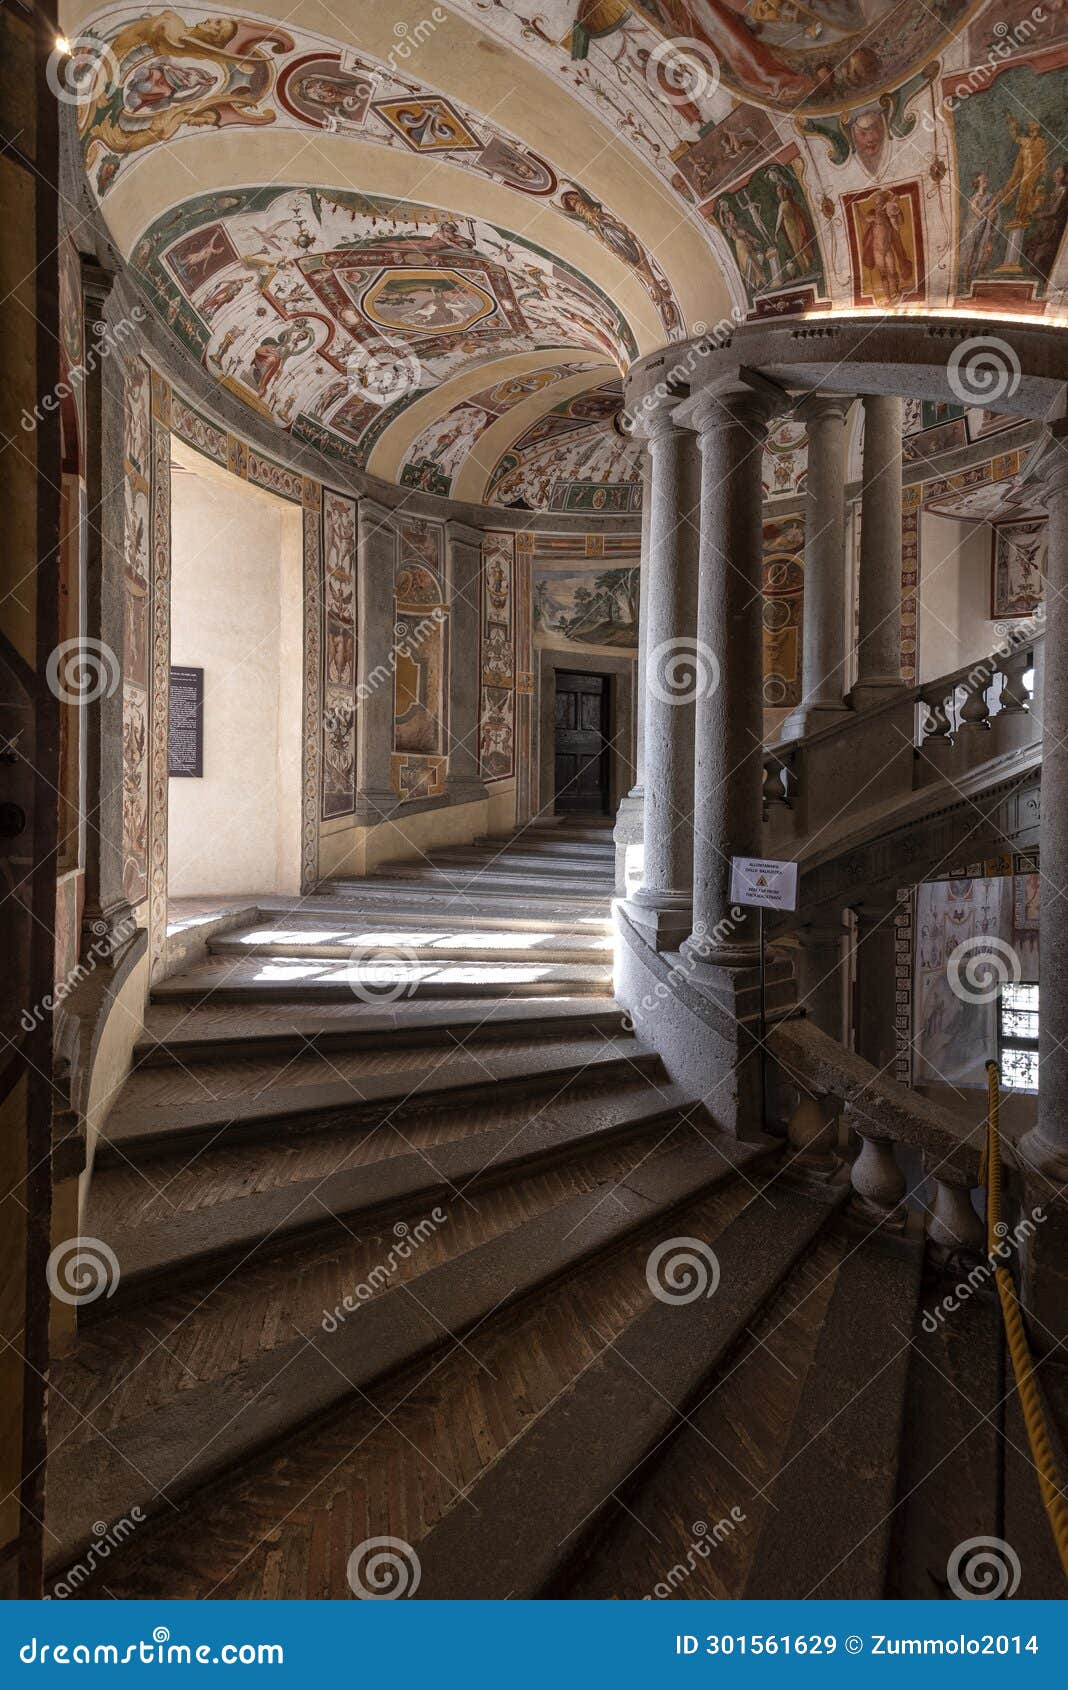 Palazzo Farnese, the Principal Staircase or Scala Regia, a Graceful ...